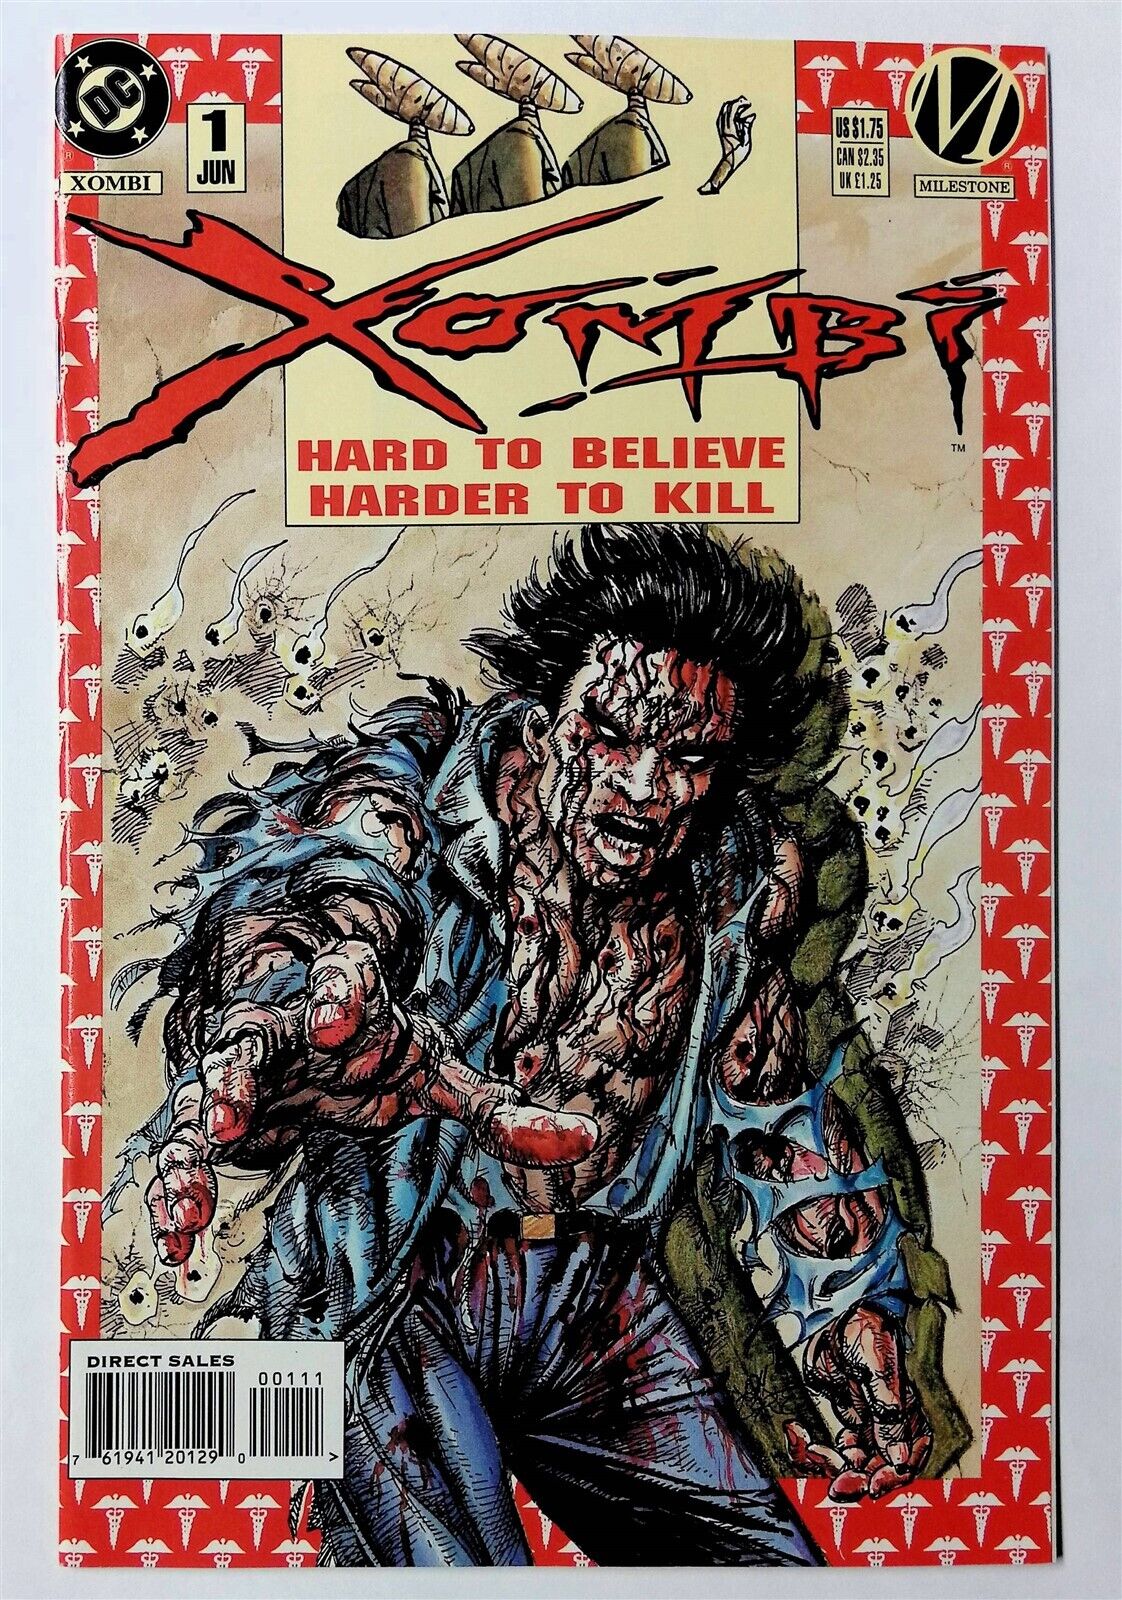 Xombi #1 (Jun 1994, DC) FN/VF